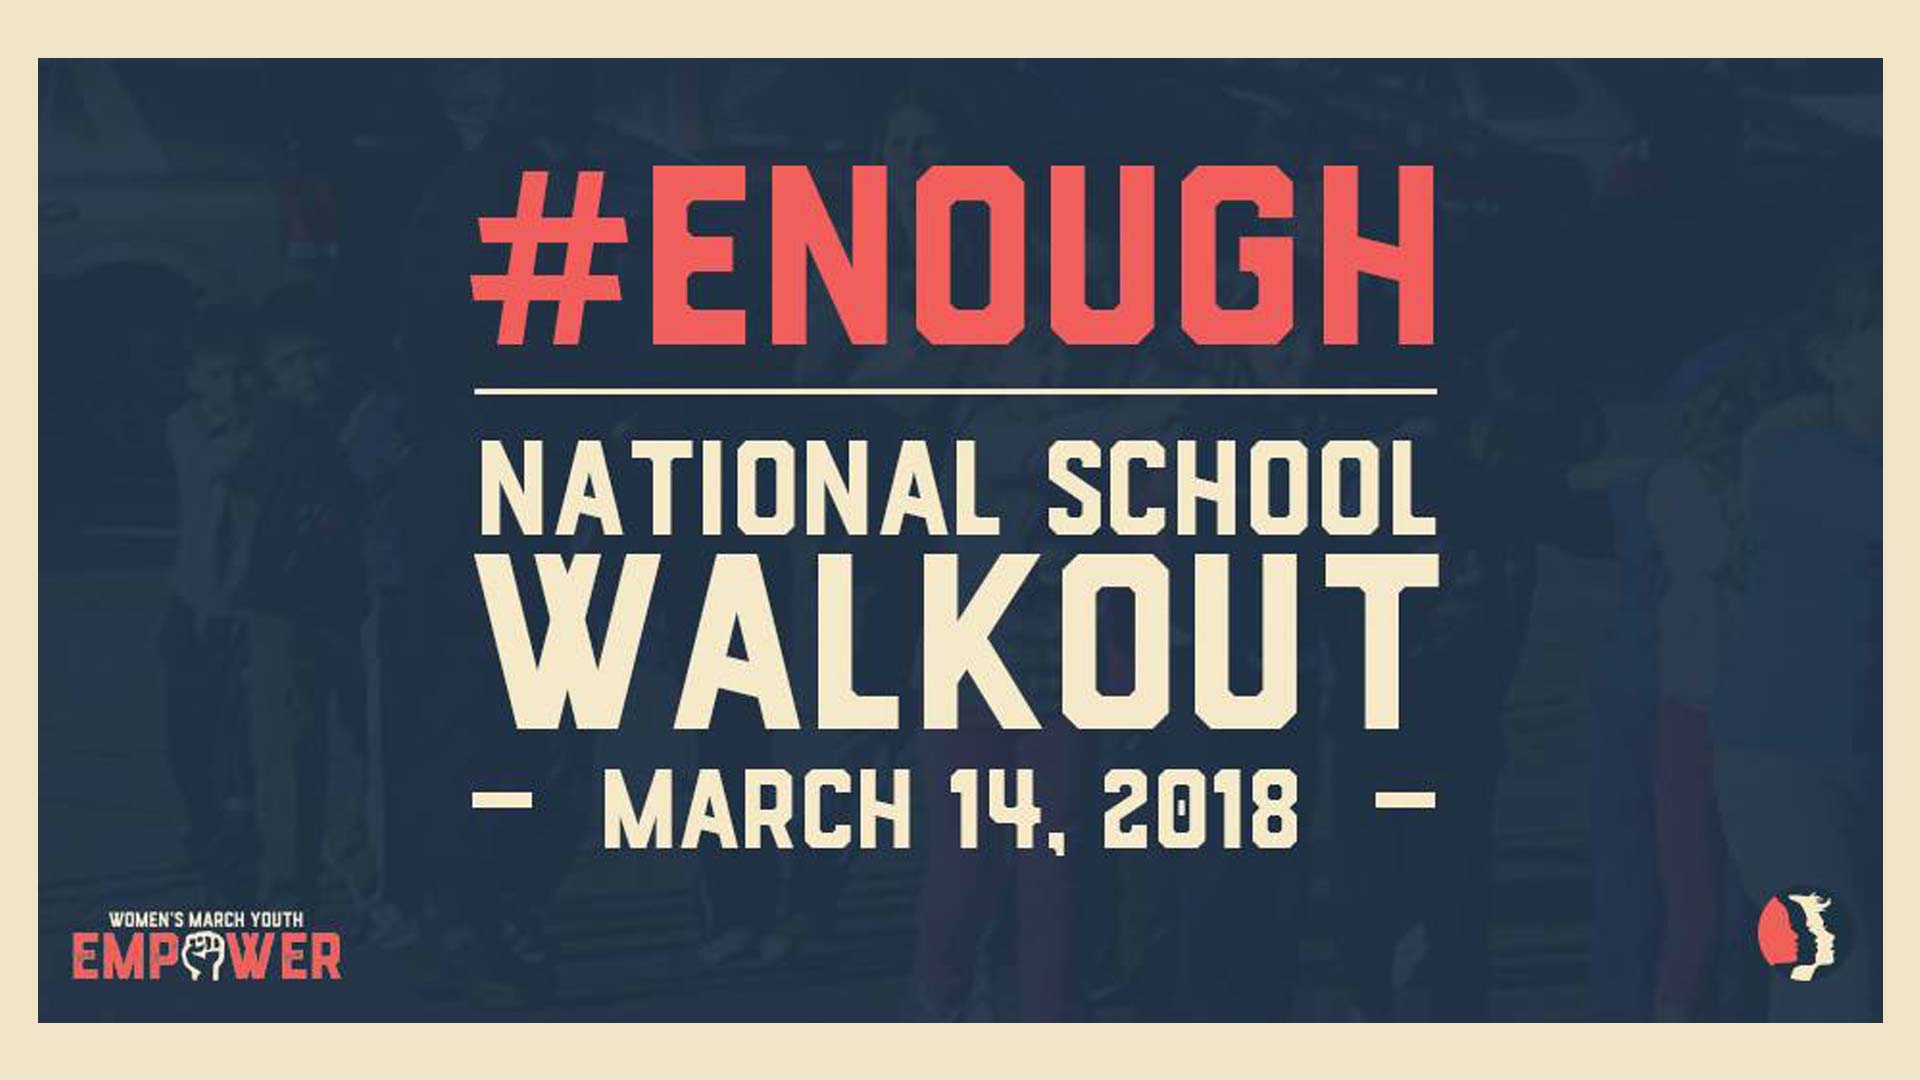 National School Walkout